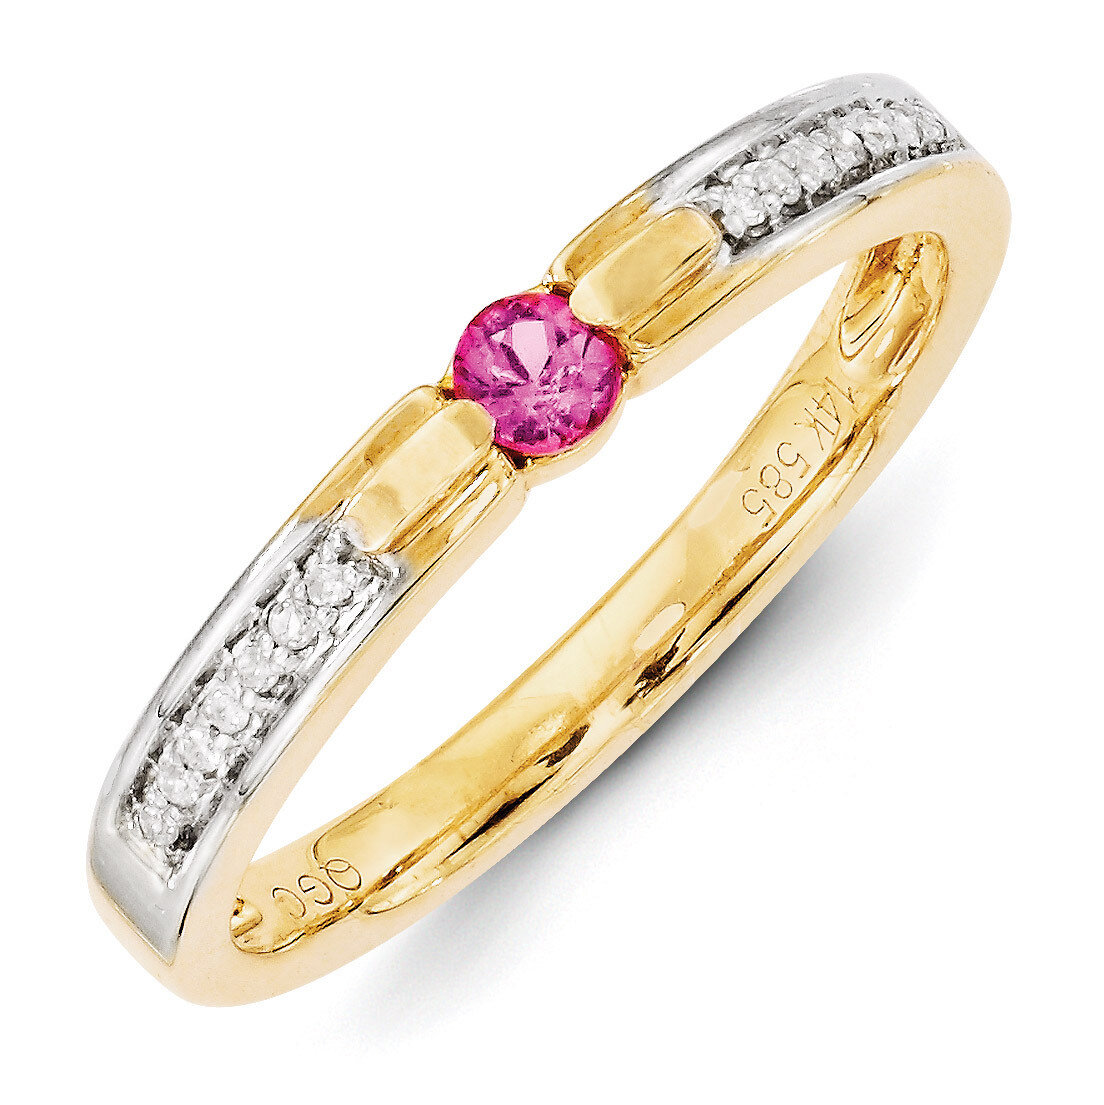 1 Birthstone Family Jewelry Diamond Semi-Set Ring 14k Yellow Gold XMR43/1